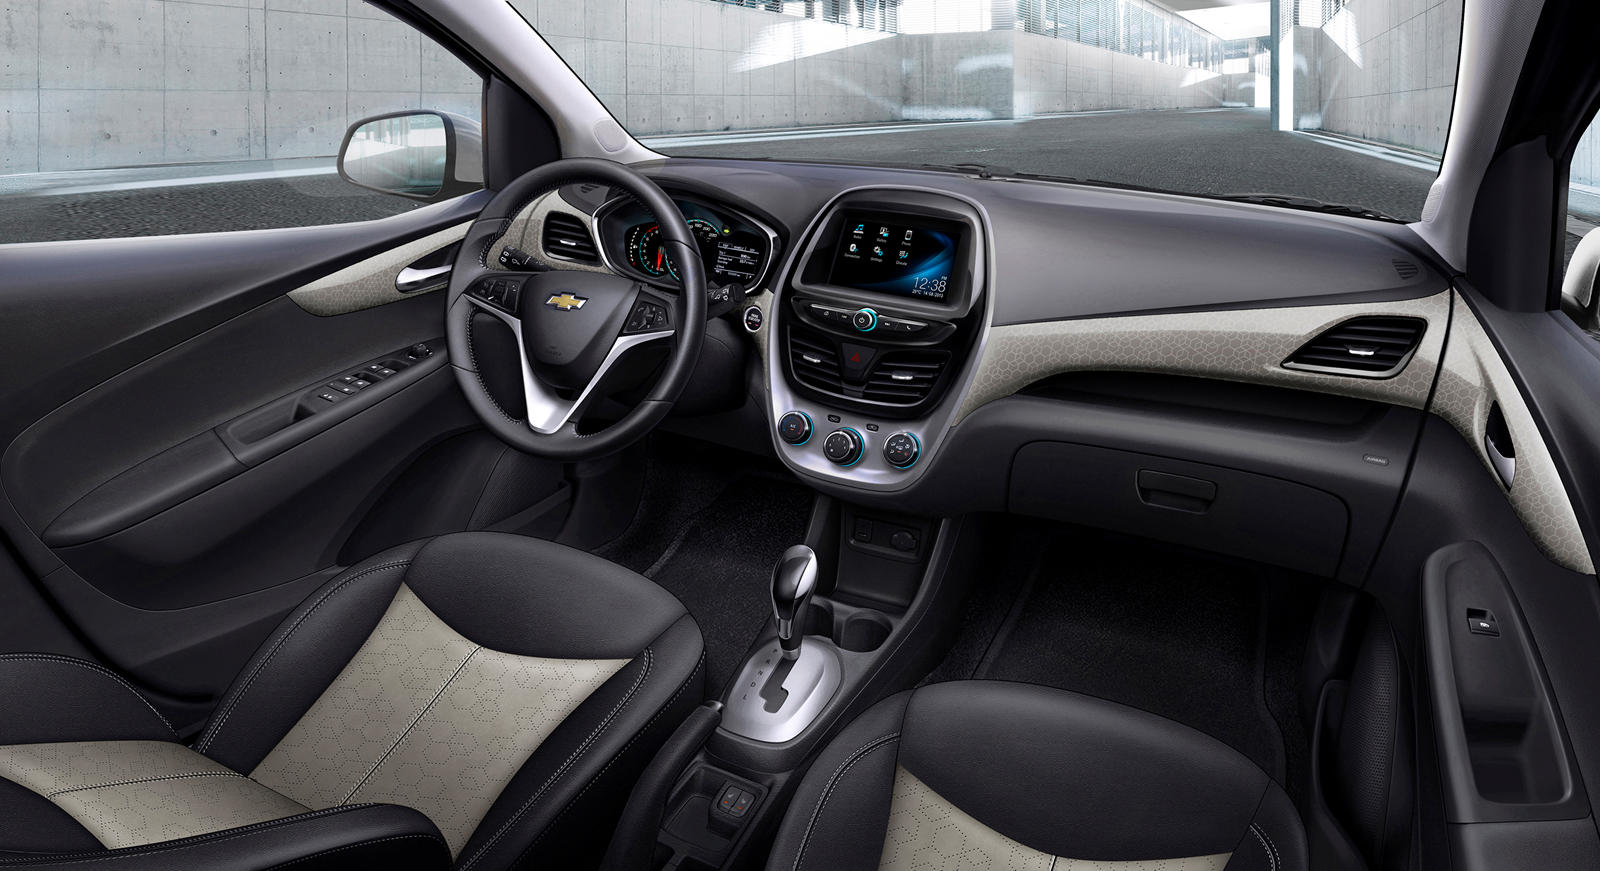 2020 Chevrolet Spark Dashboard